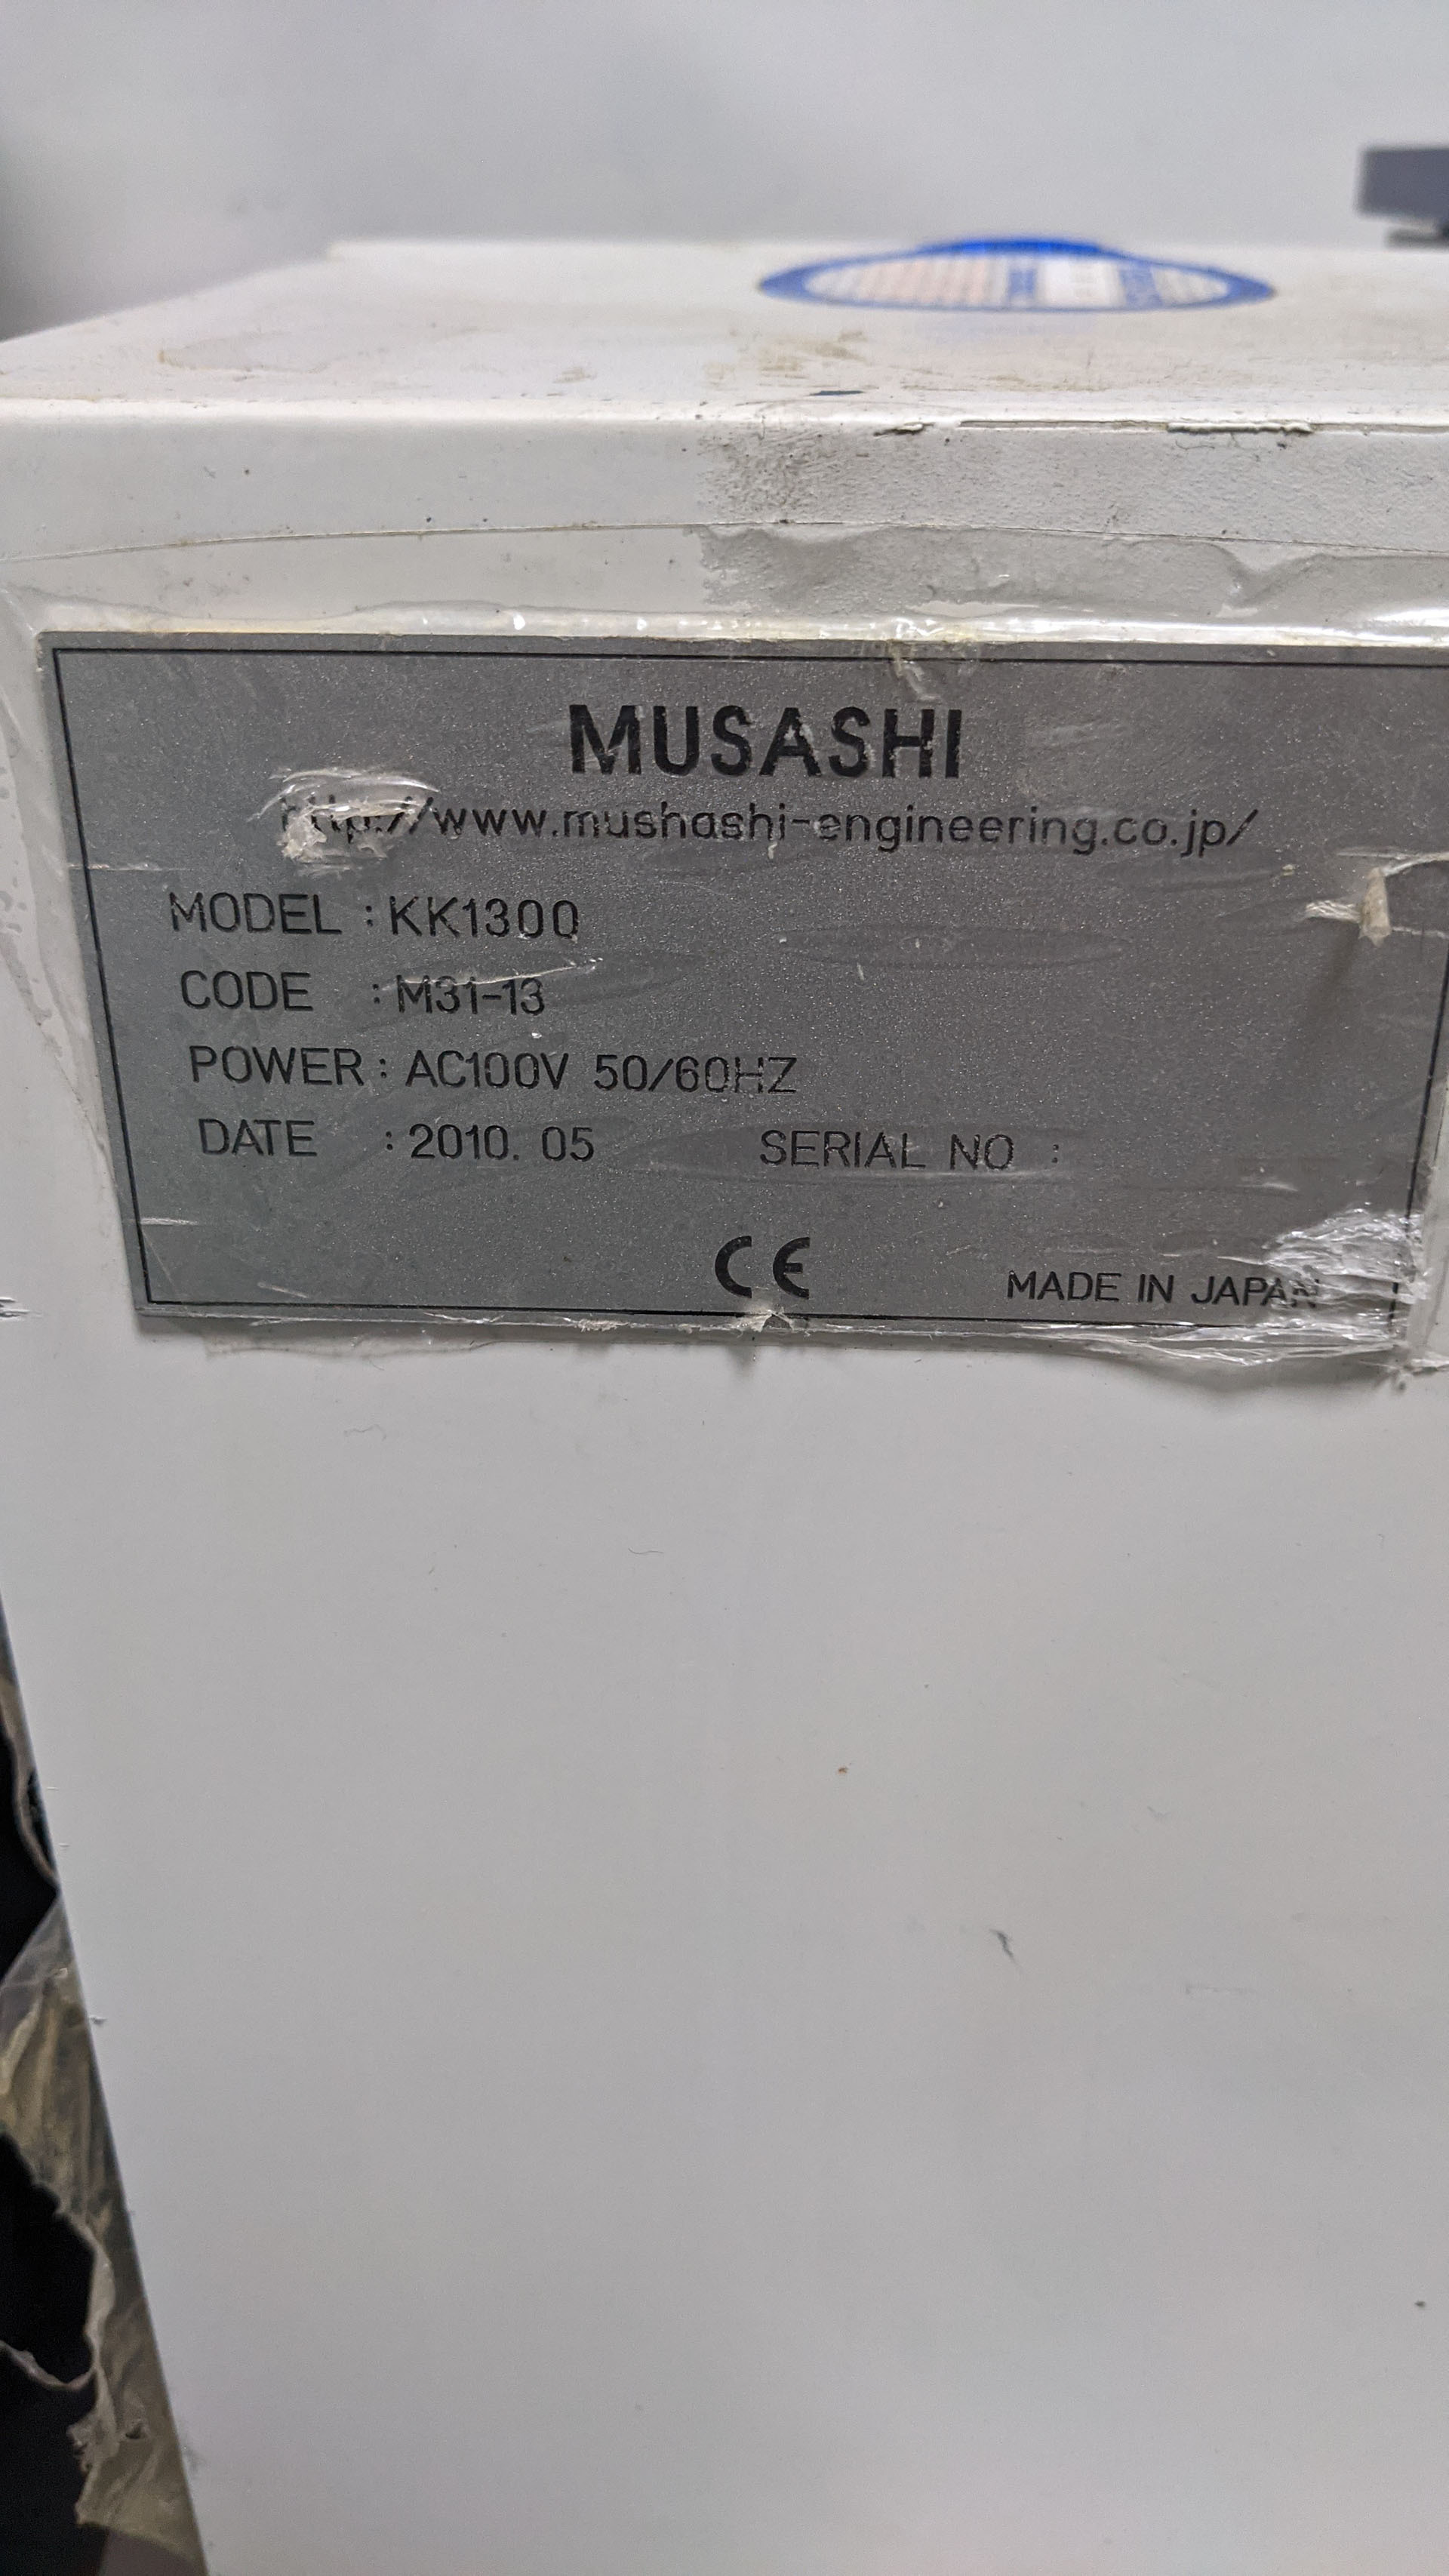 图为 已使用的 MUSASHI ENGINEERING AW-MV310 待售